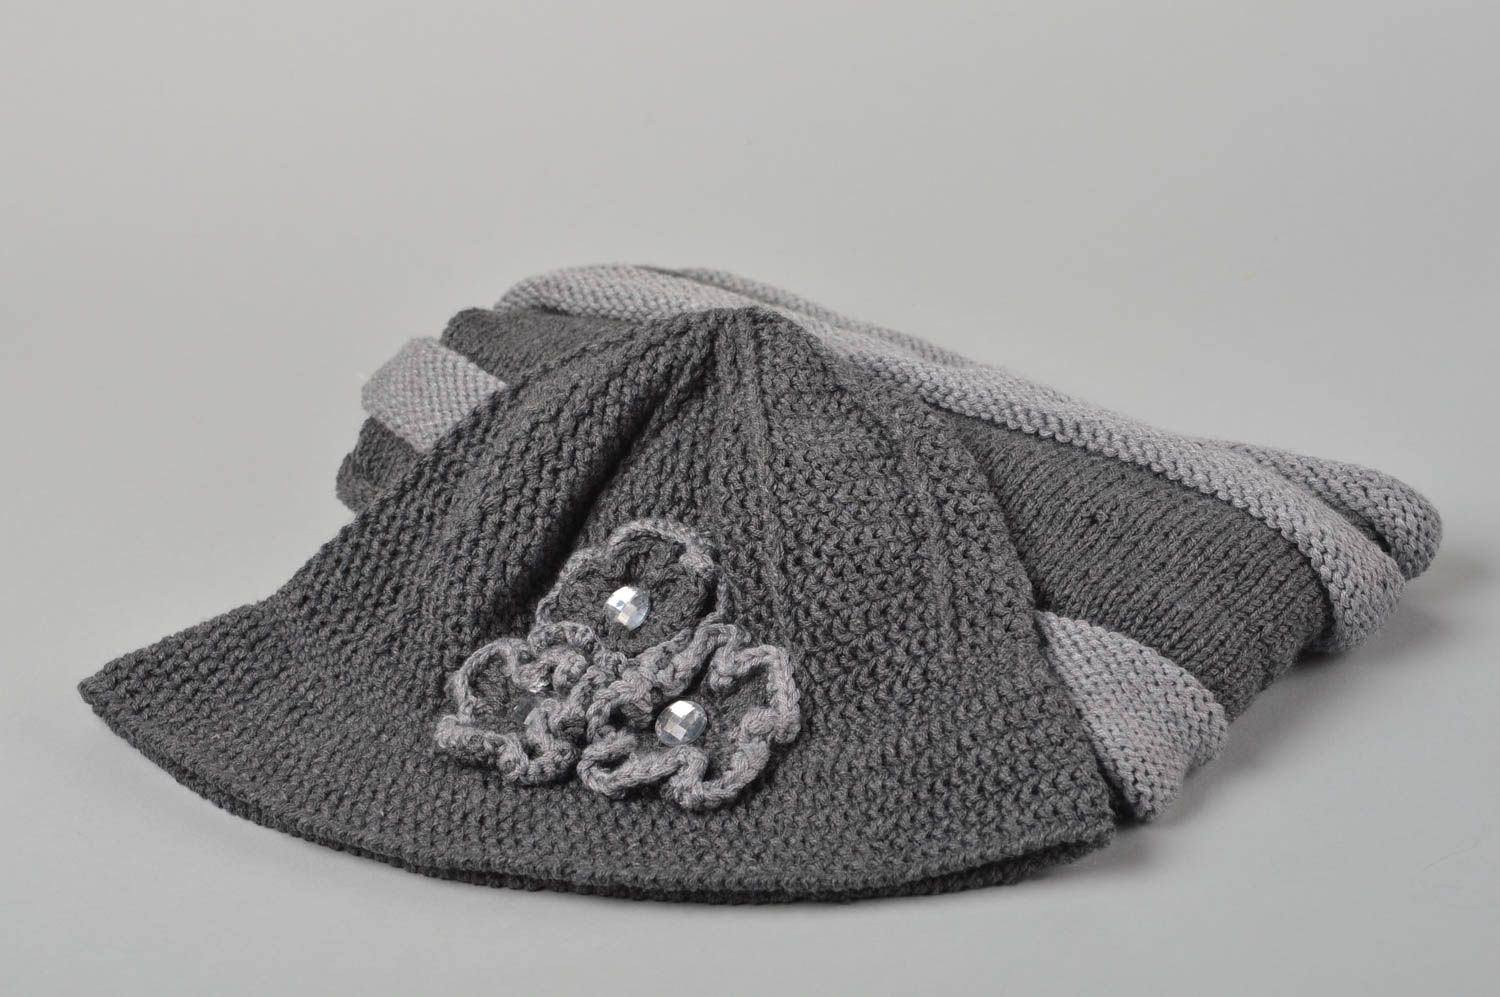 Handmade designer crocheted hat crochet scarf winter accessories for women photo 2